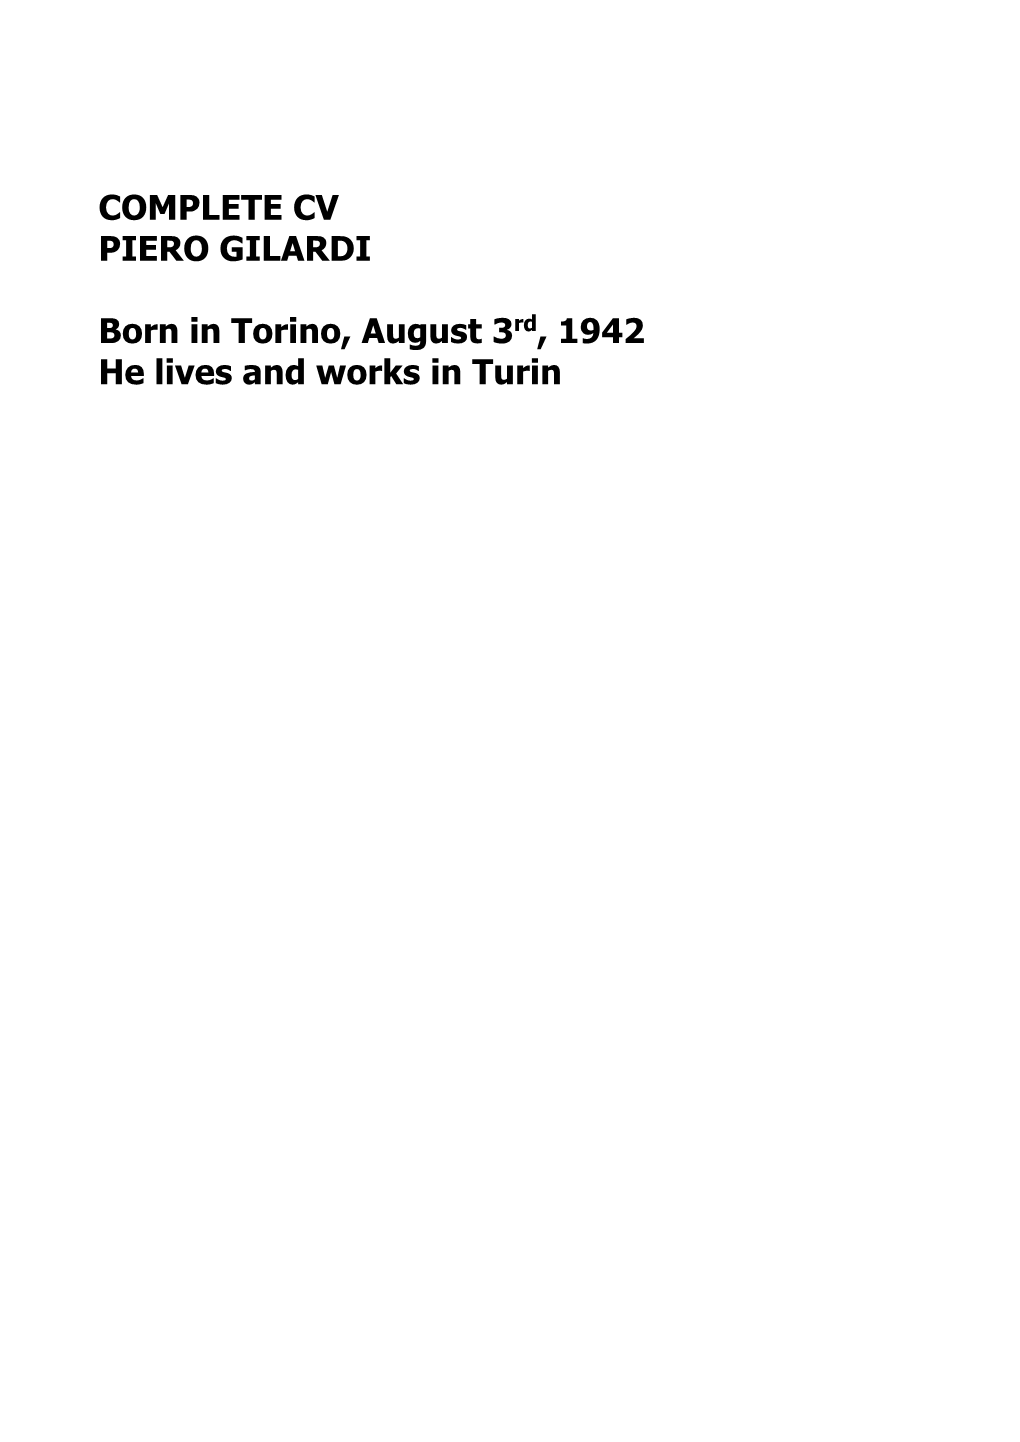 COMPLETE CV PIERO GILARDI Born in Torino, August 3Rd, 1942 He Lives